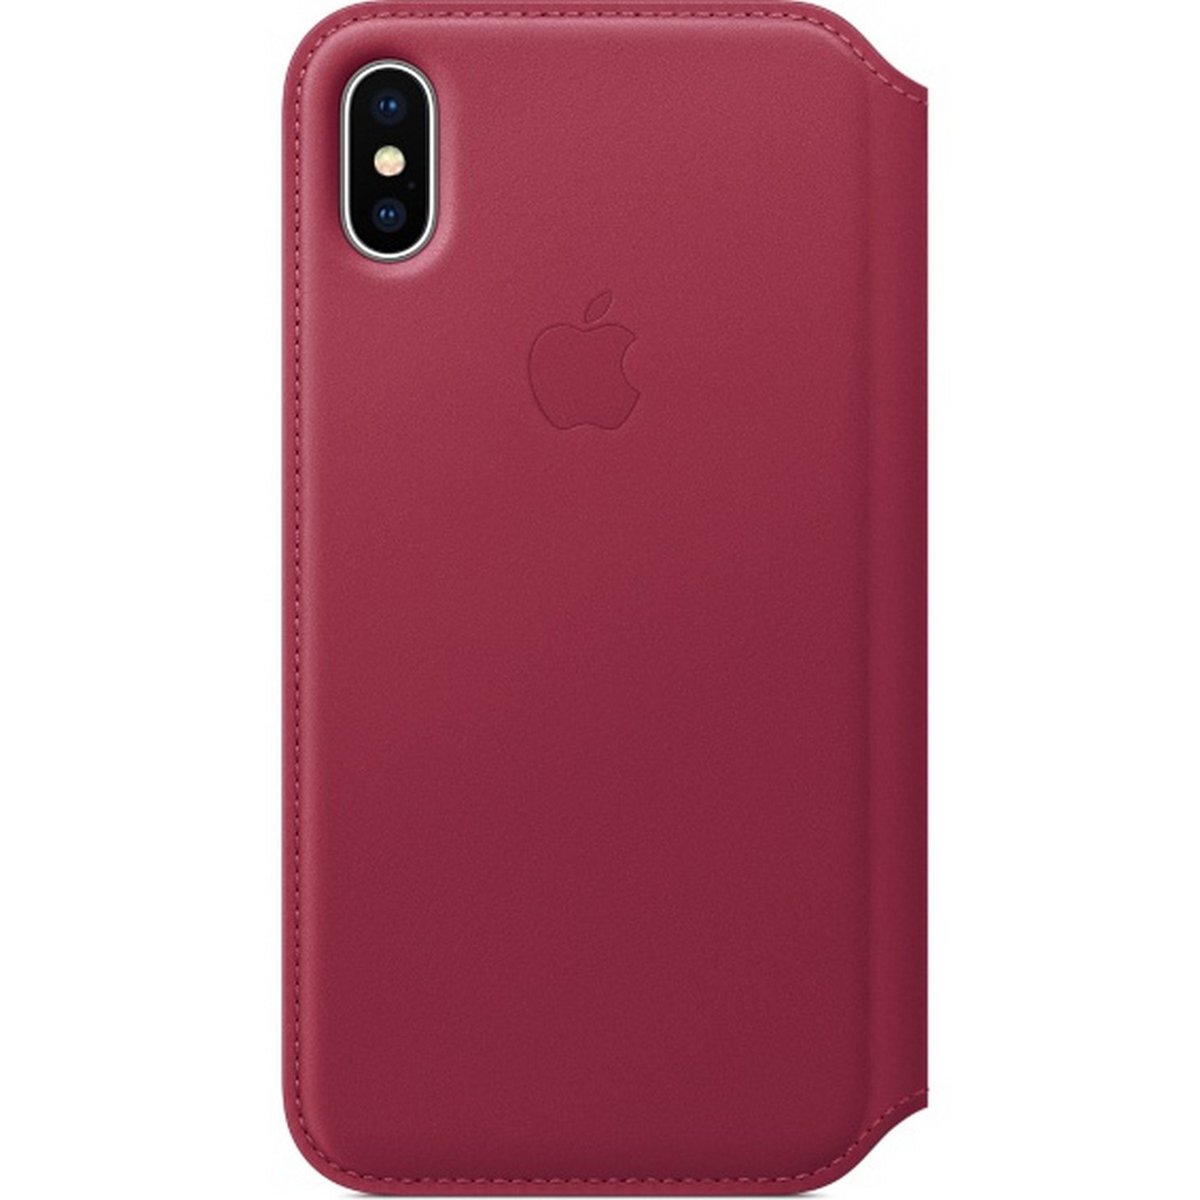 Apple iPhone X Leather Case Folio Berry